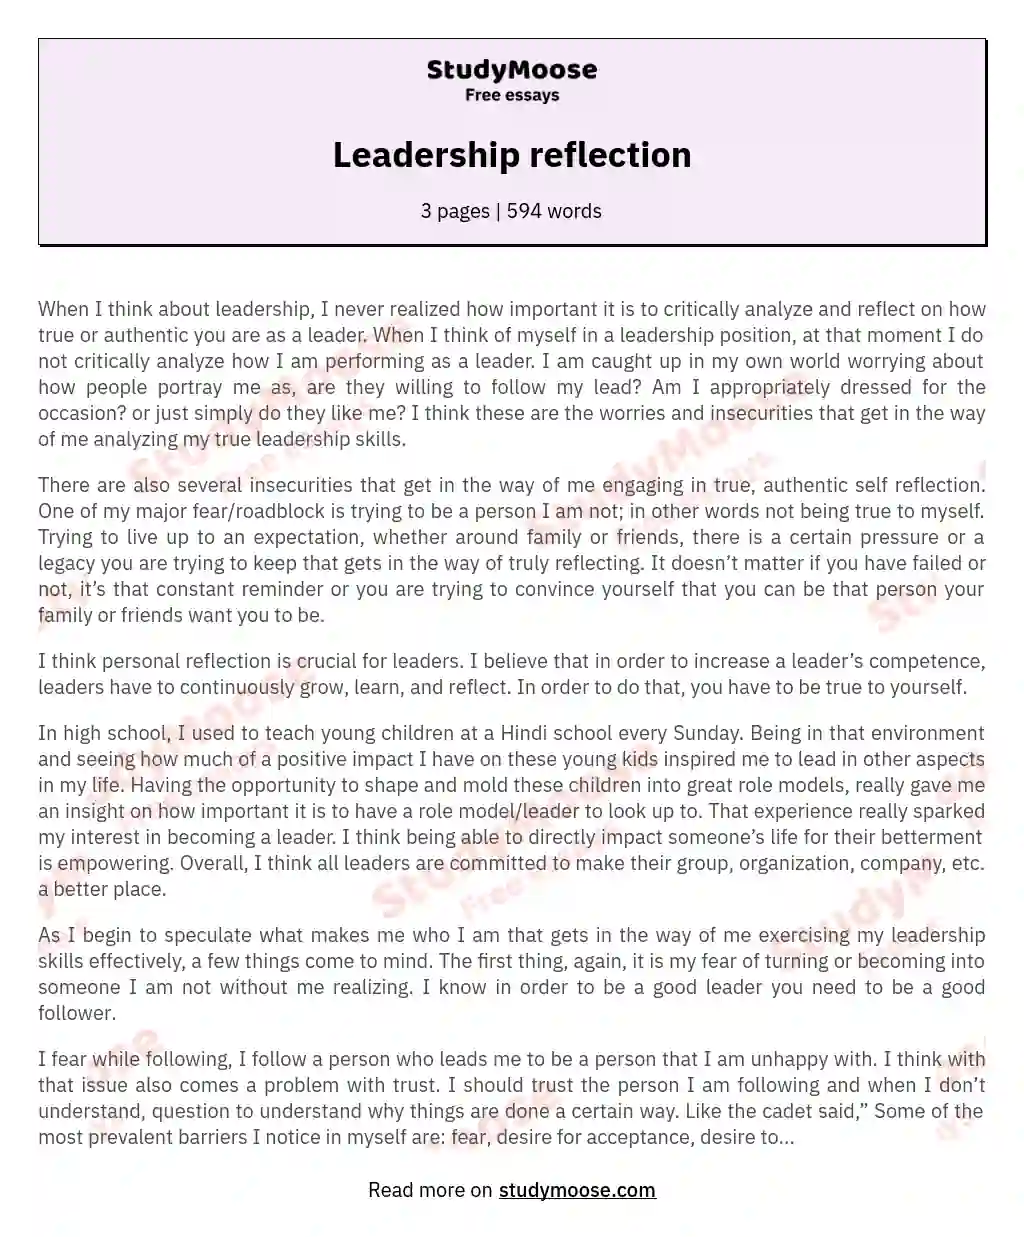 Leadership reflection essay